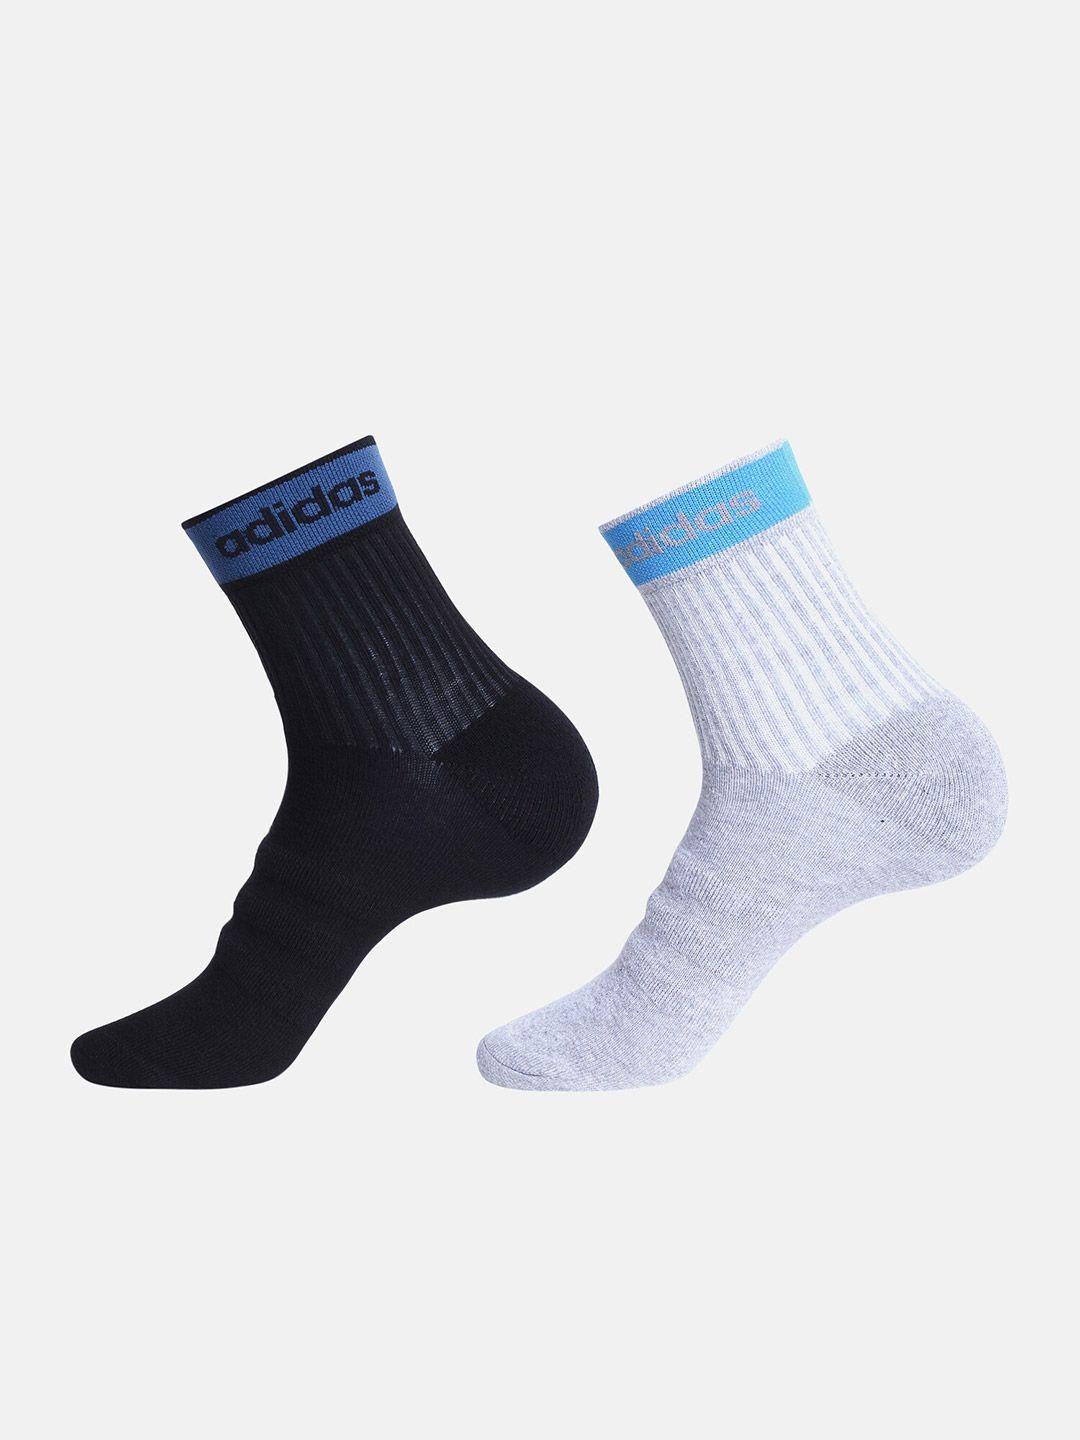 adidas-men-pack-of-2-patterned-heel-&-toe-cushion-above-ankle-length-socks